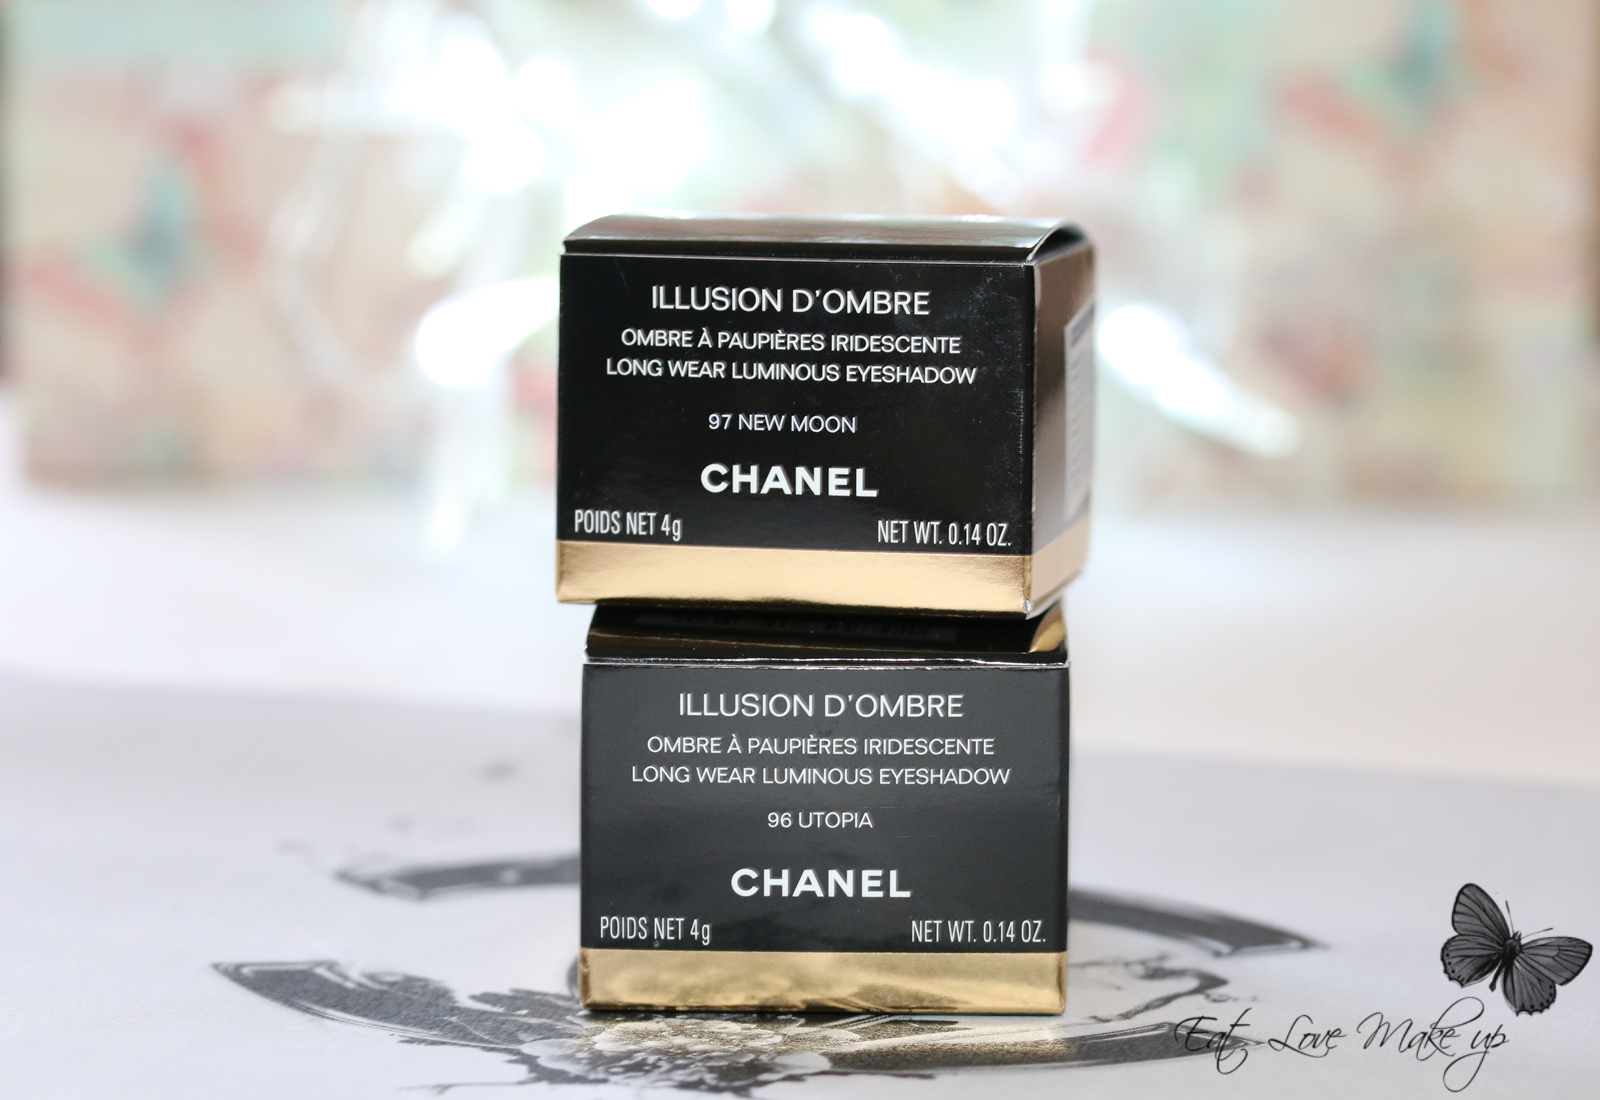 Chanel New Moon (97) Illusion d'Ombre Long Wear Luminous Eyeshadow